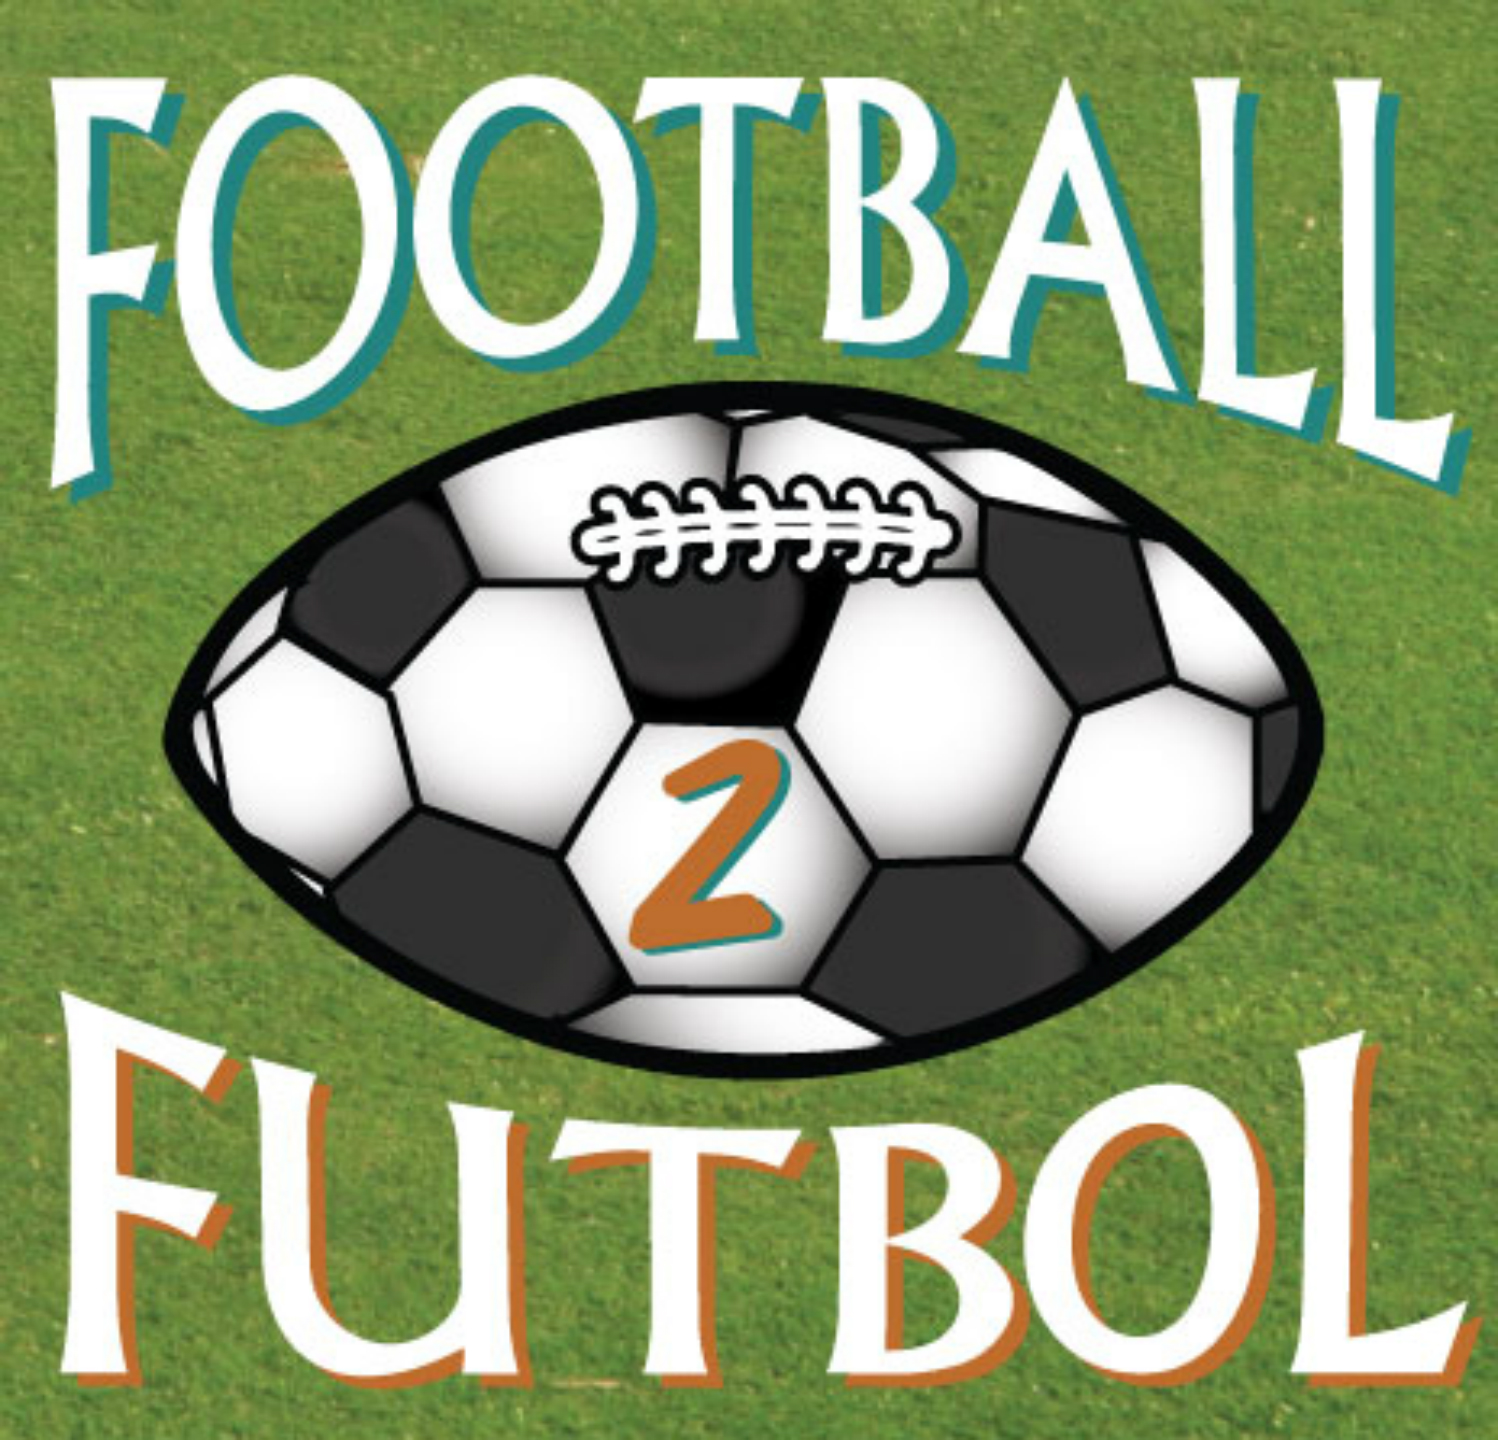 Football 2 Futbol:  National Championship Game, NFL Wildcard Weekend Recap, & NFL News